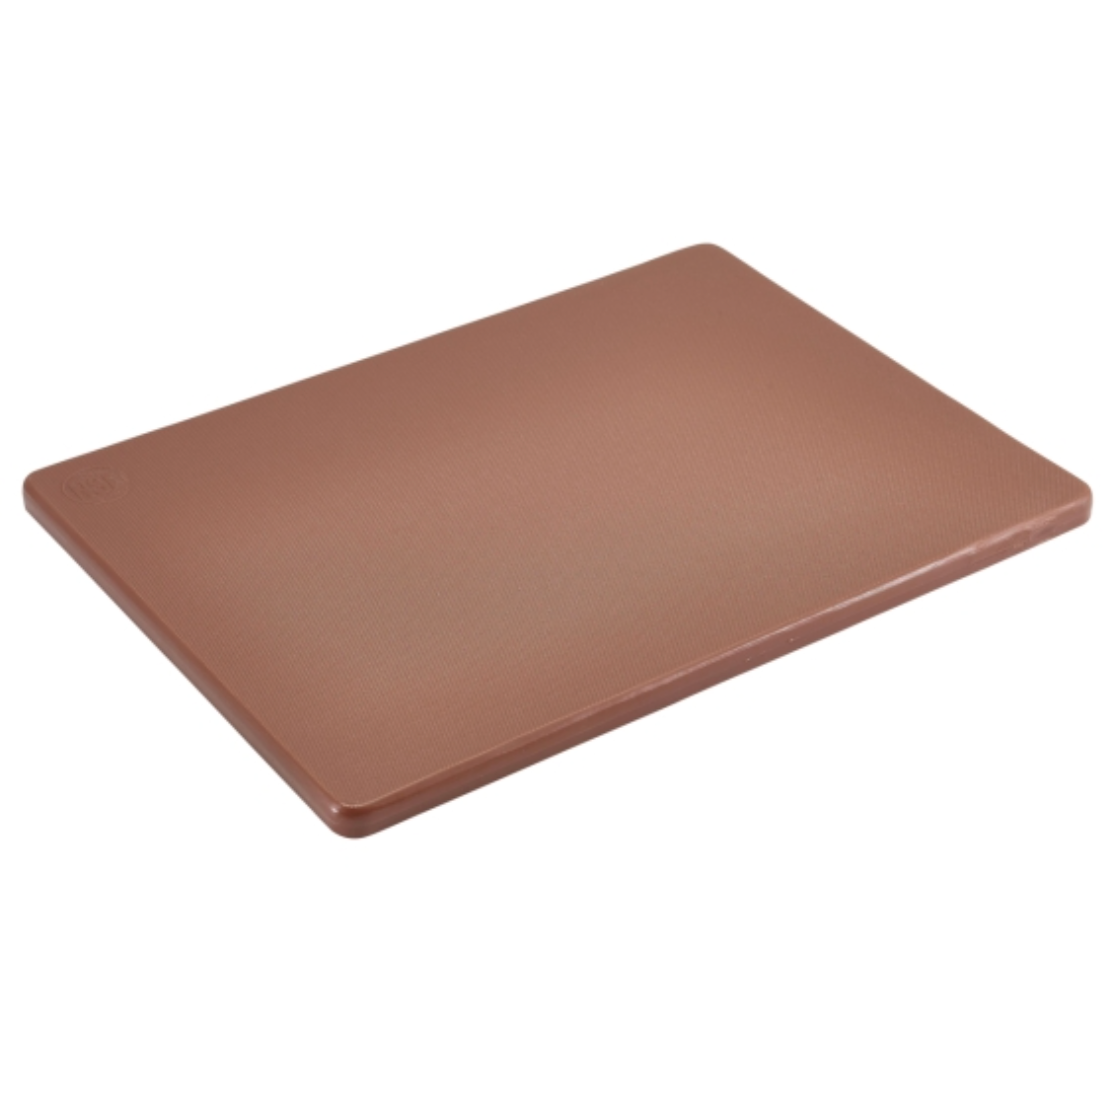 GenWare Brown High Density Chopping Board 45.7 x 30.5 x 1.2cm